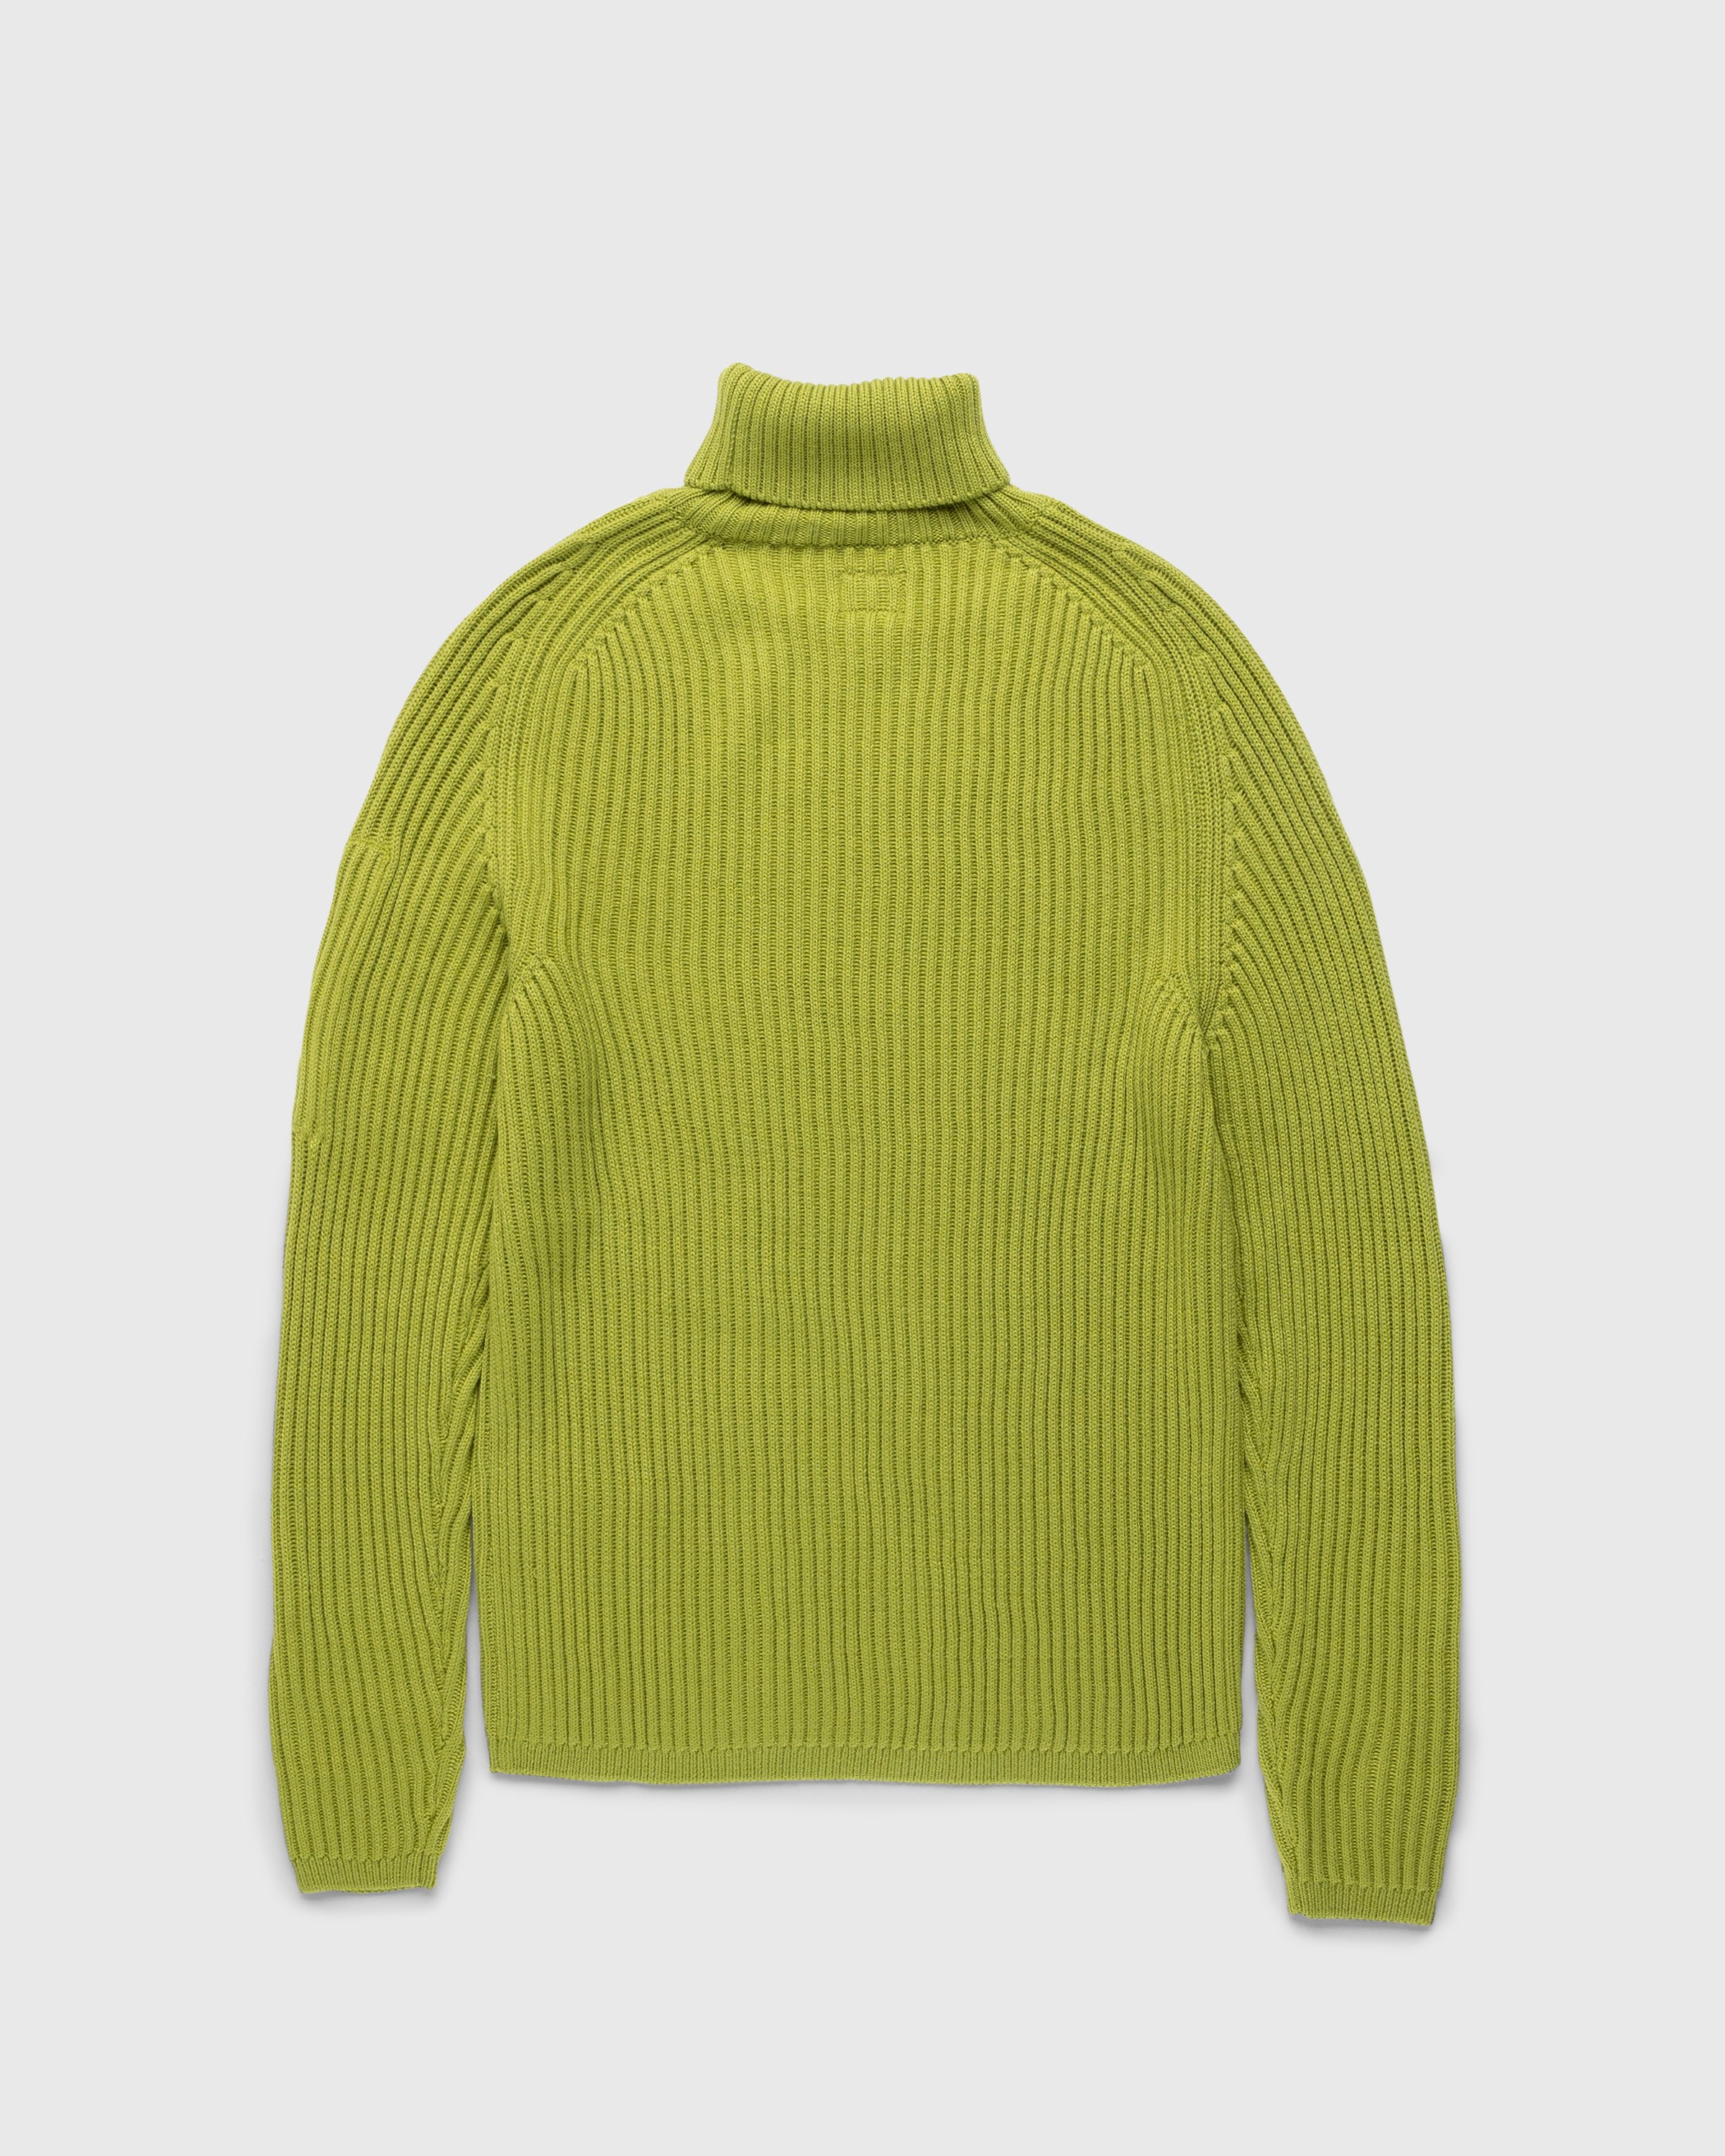 C.P. Company - Merino Wool Turtleneck Green - Clothing - Green - Image 2